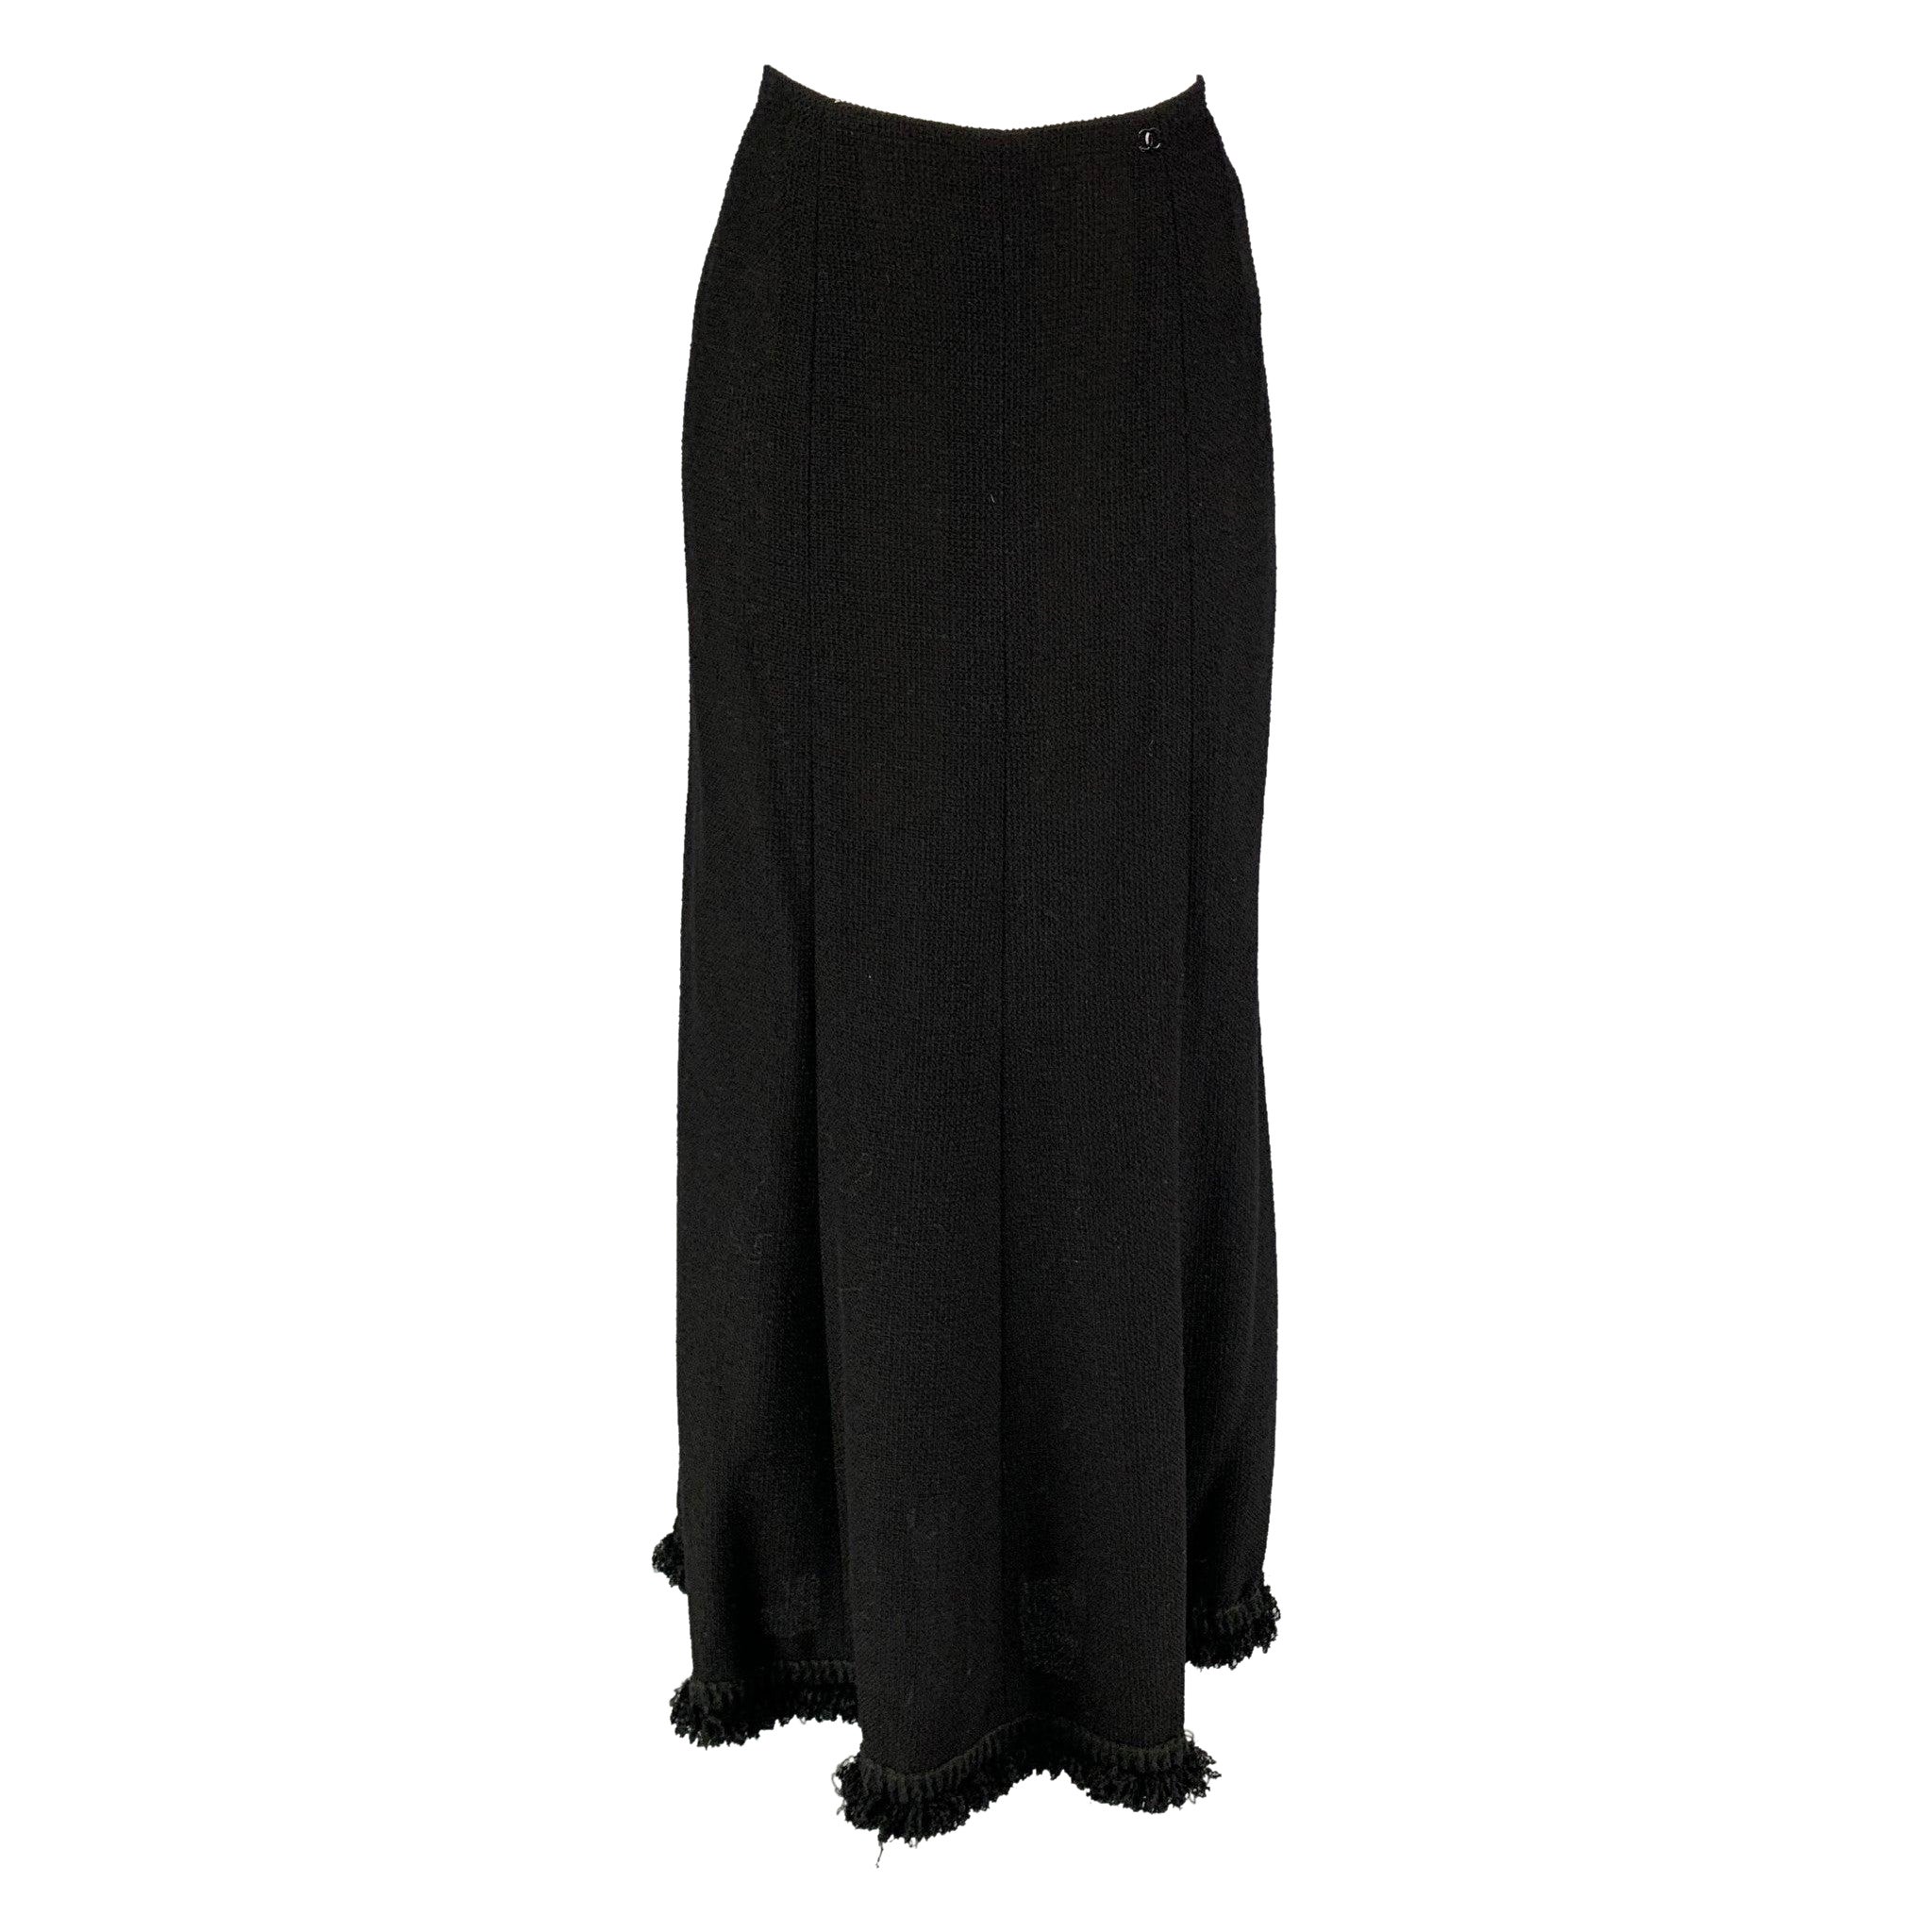 CHANEL Size 4 Black Wool Blend Textured Long Skirt